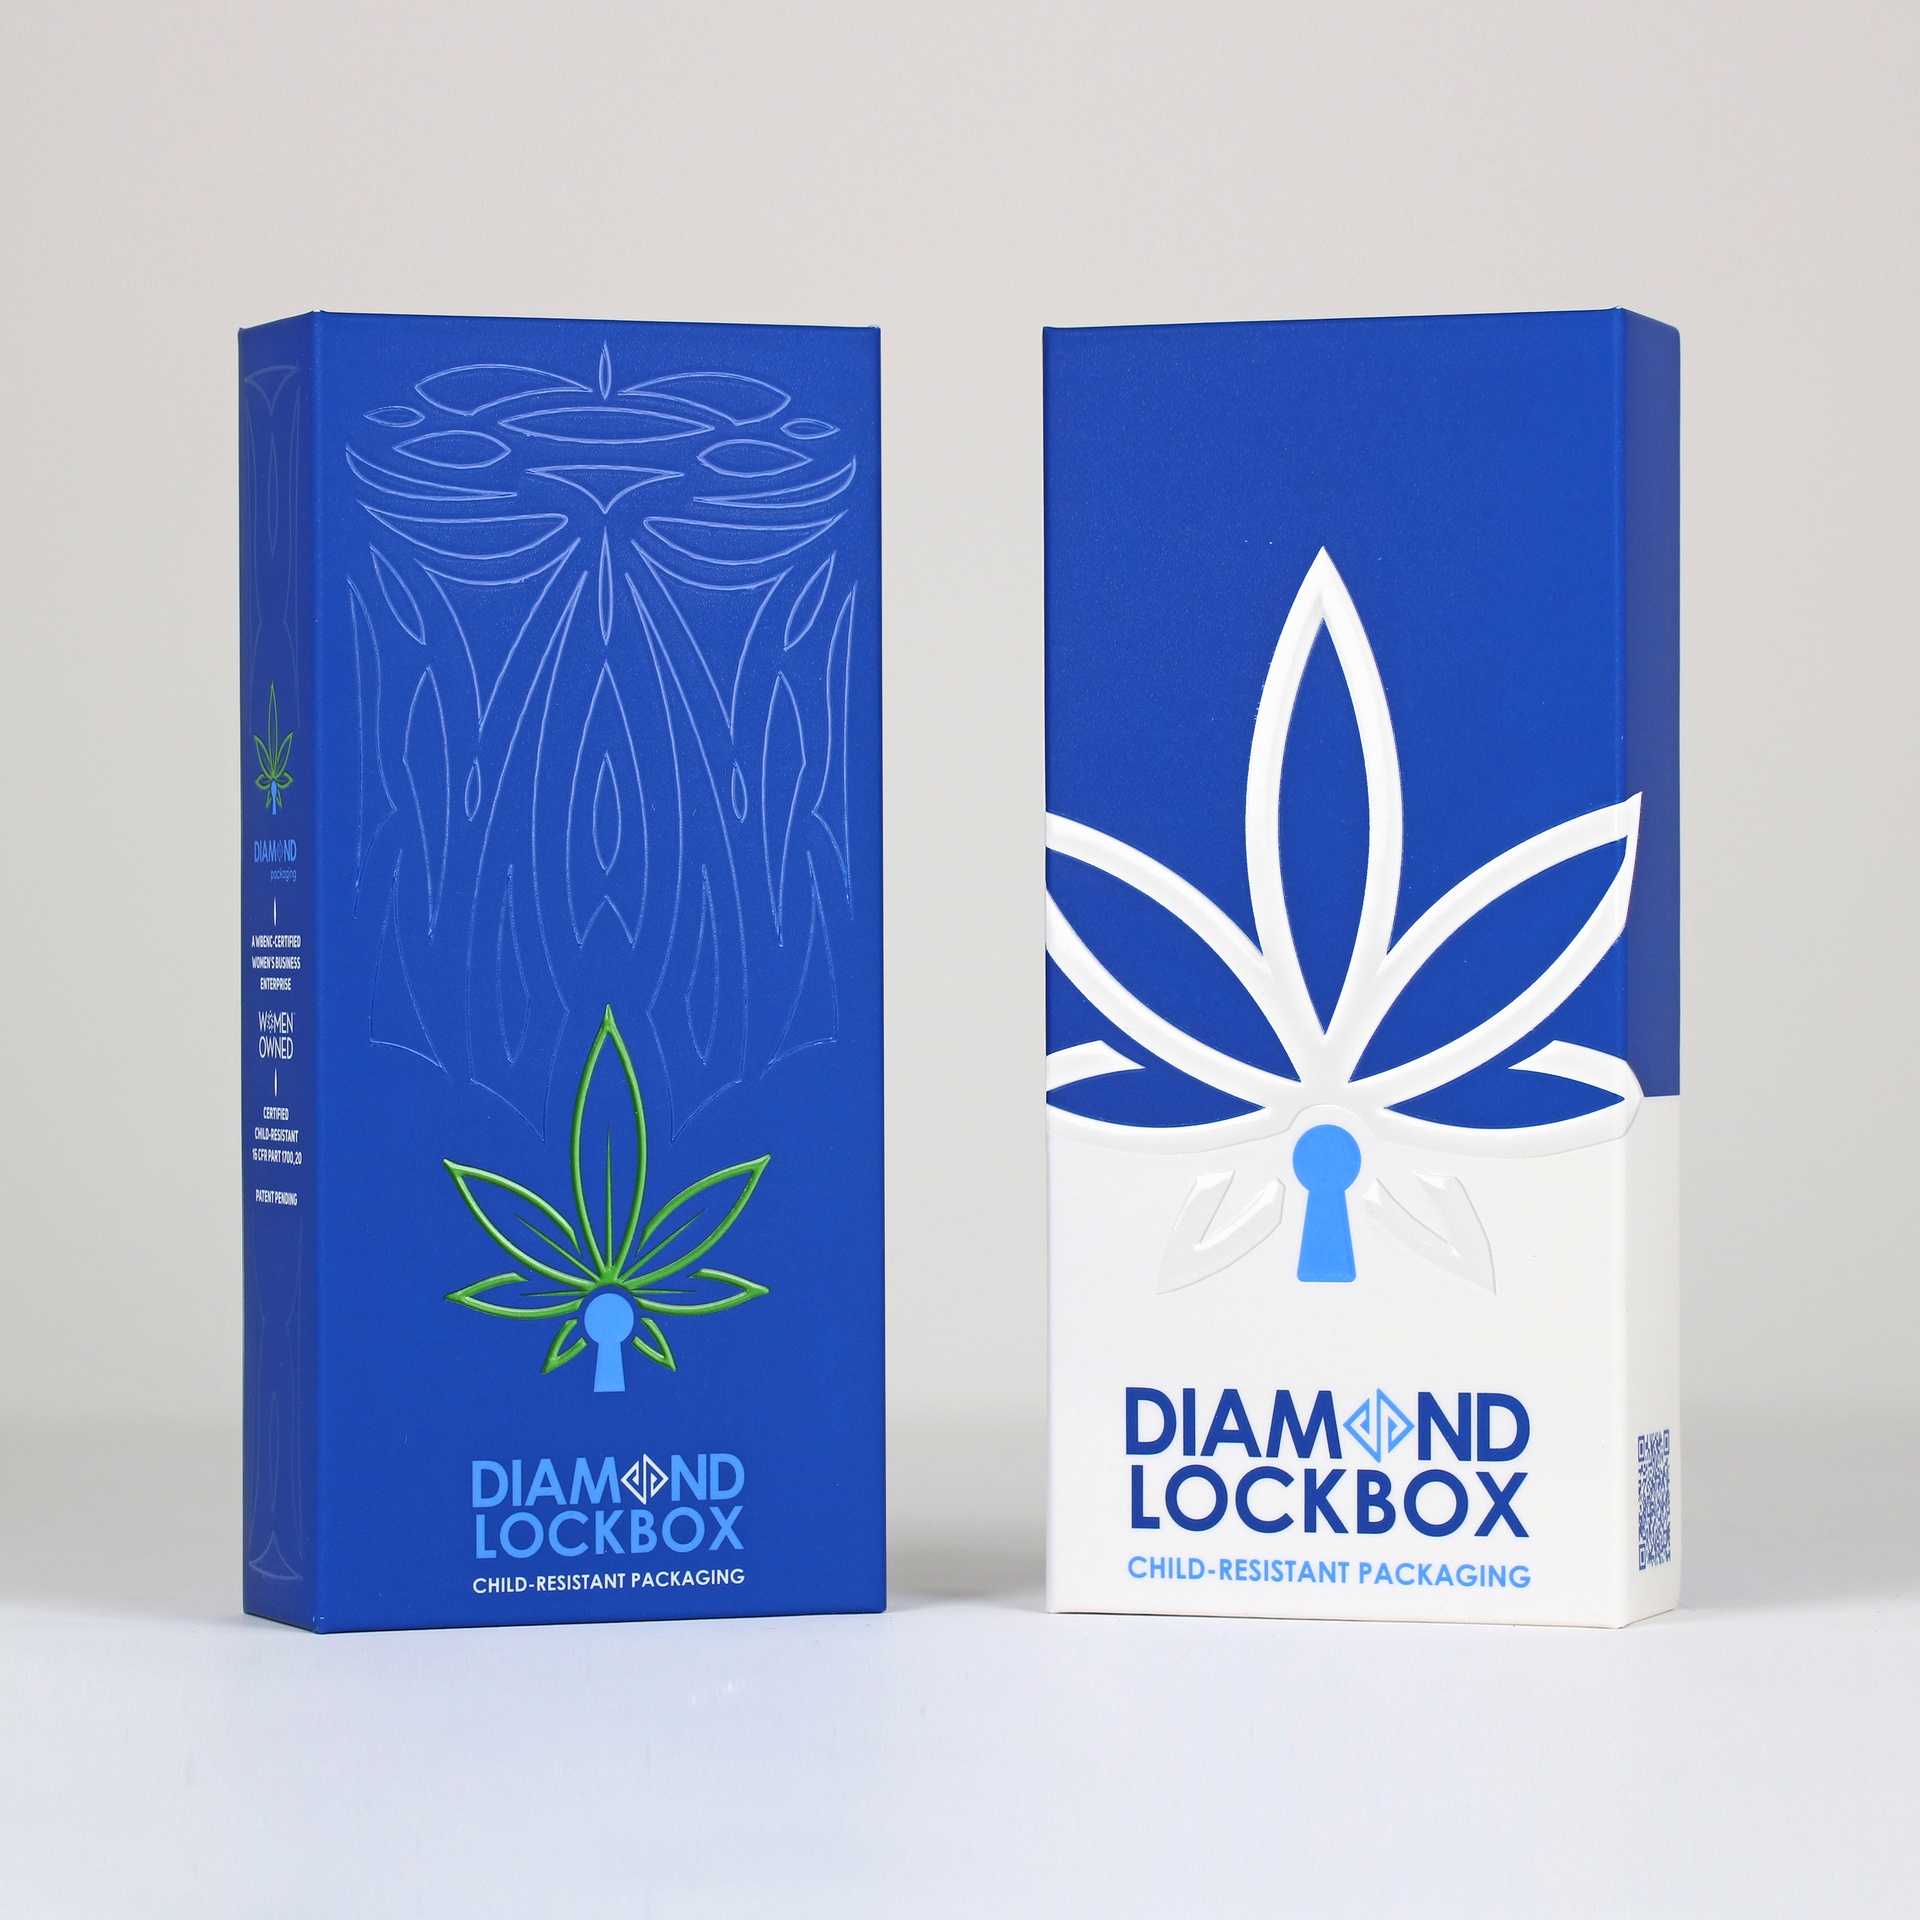 Diamond Lockbox™ folding cartons